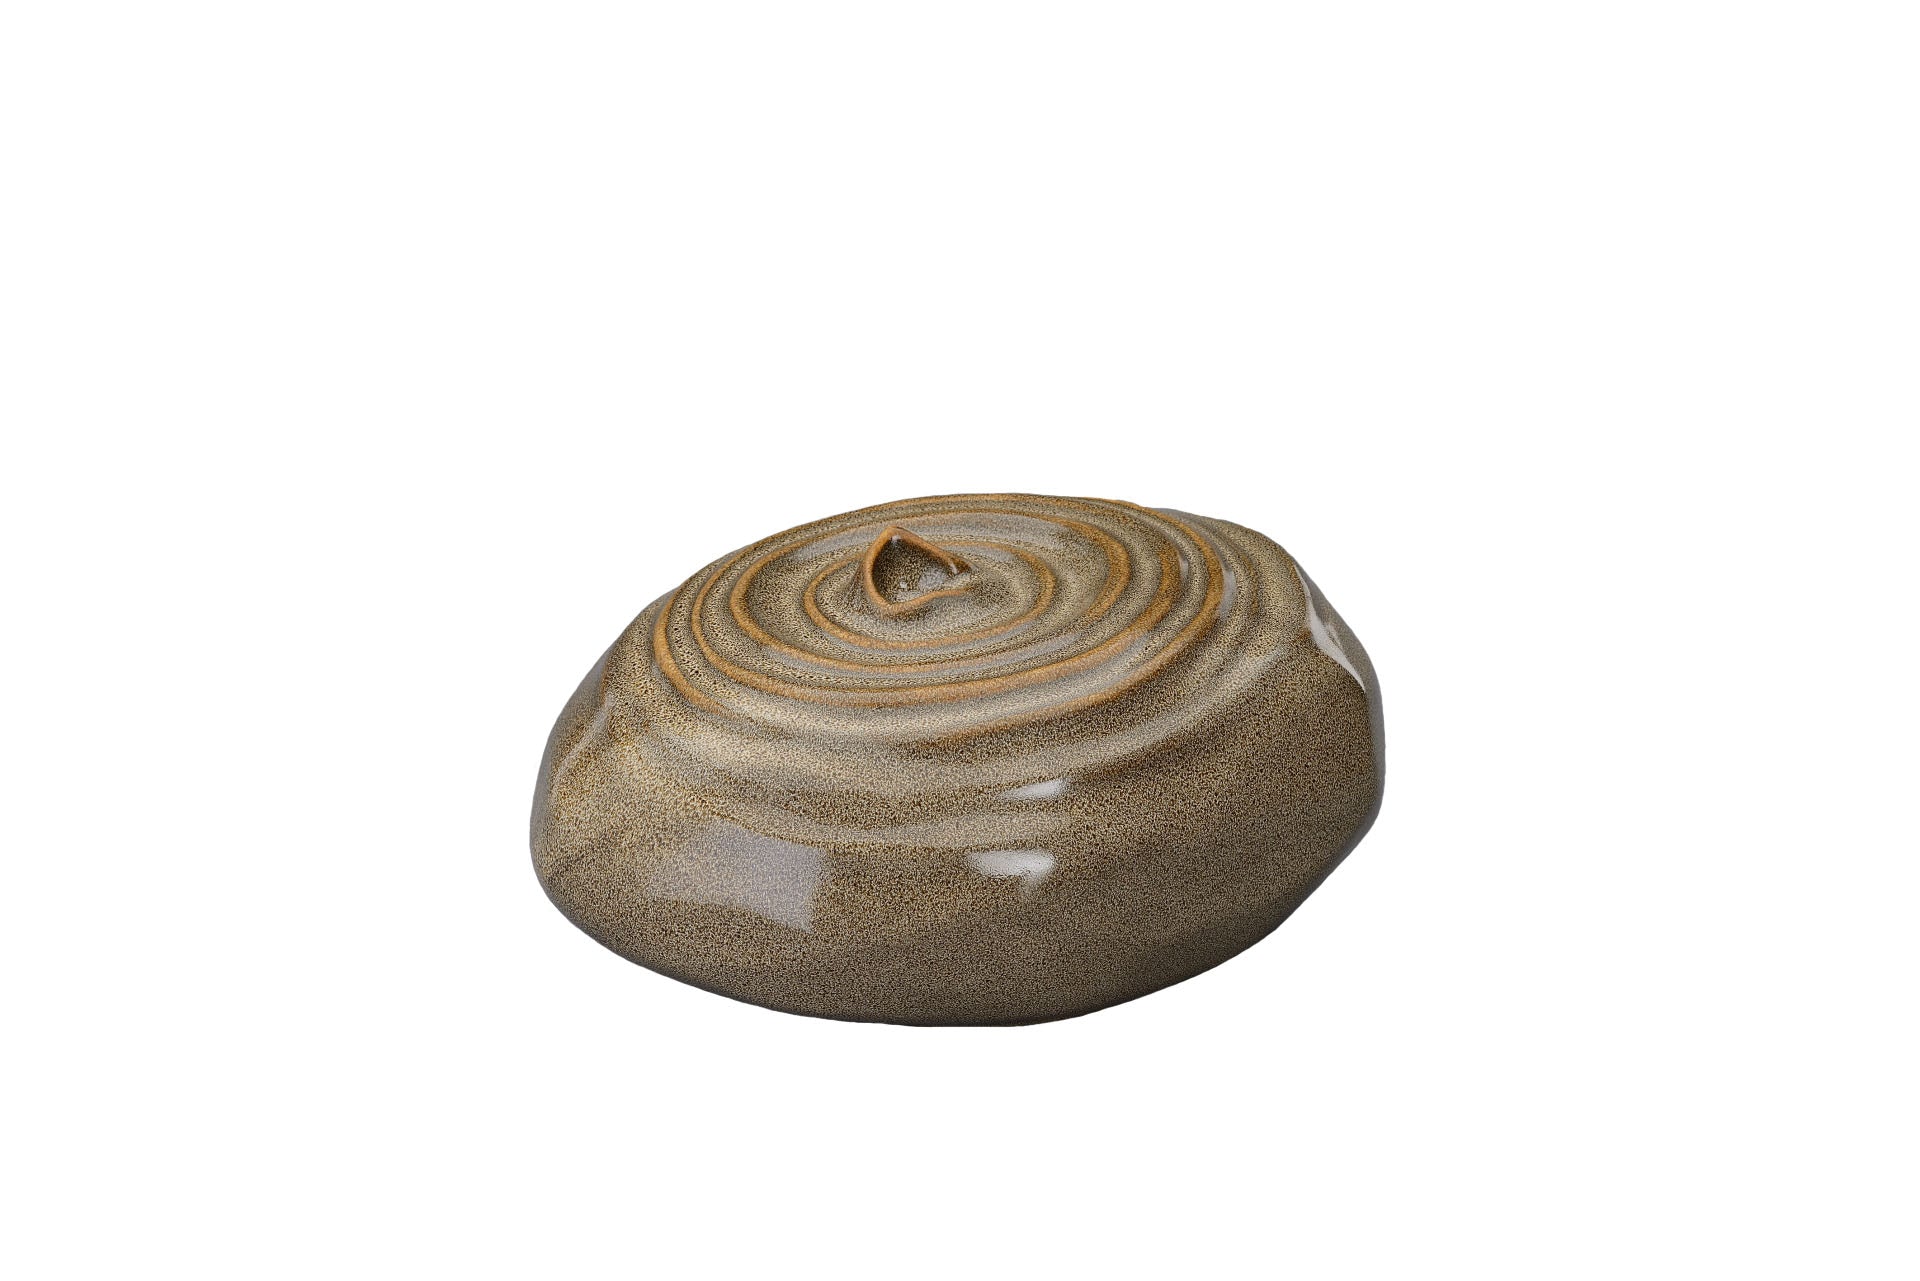 Resonance ceramic urn